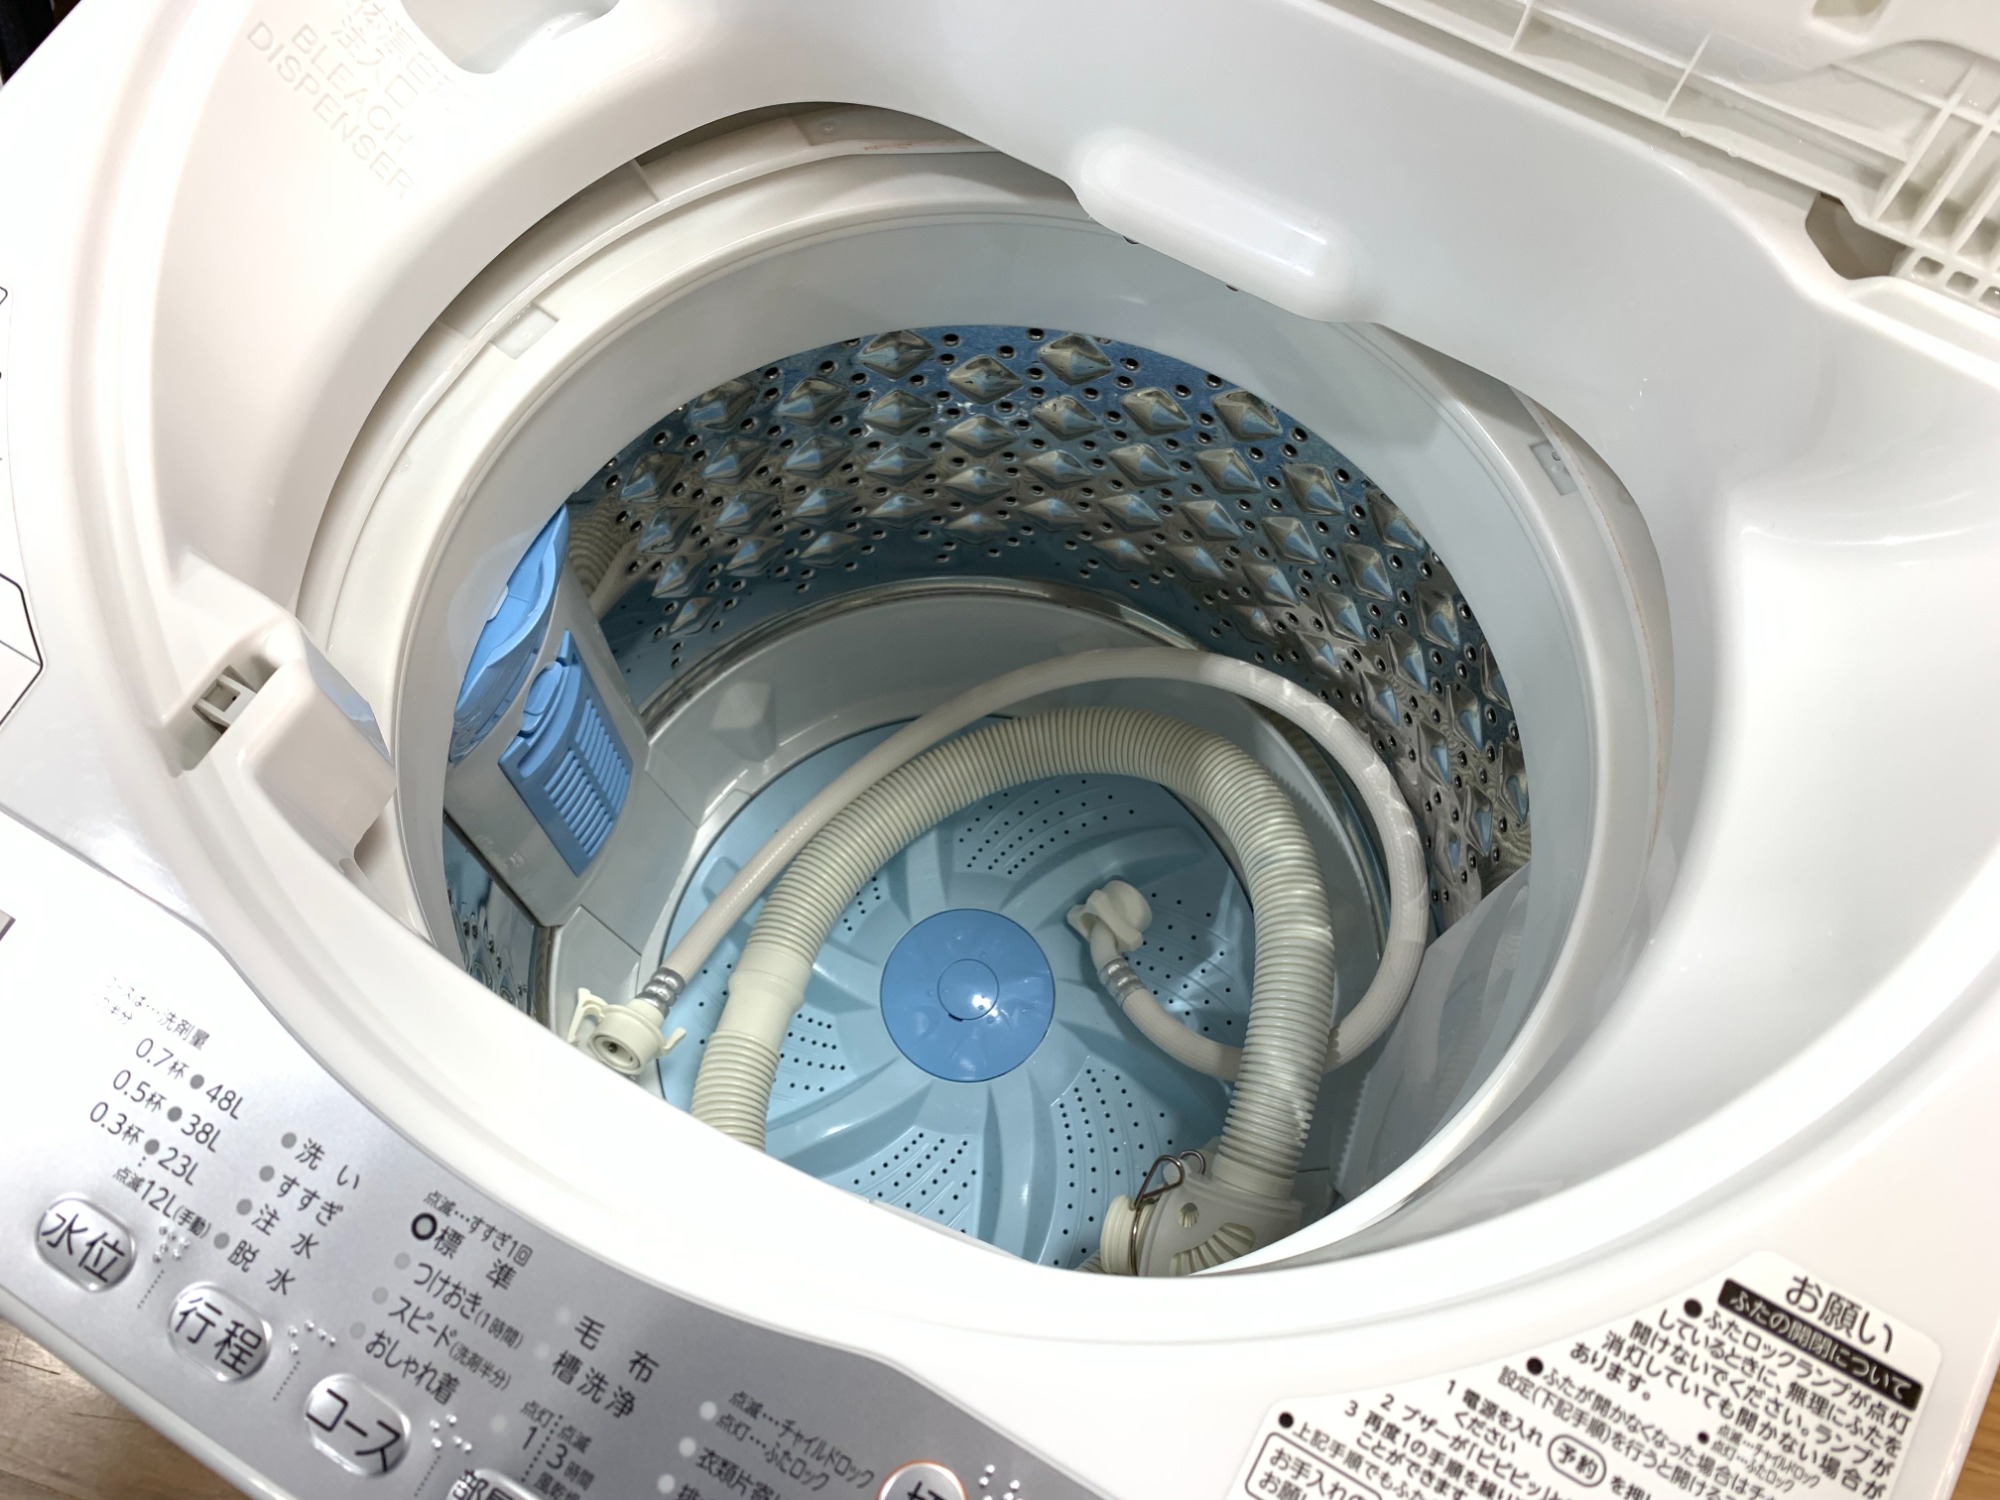 TOSHIBA(東芝) 5.0kg 全自動洗濯機 AW-5G6 2019年製 入荷致しました